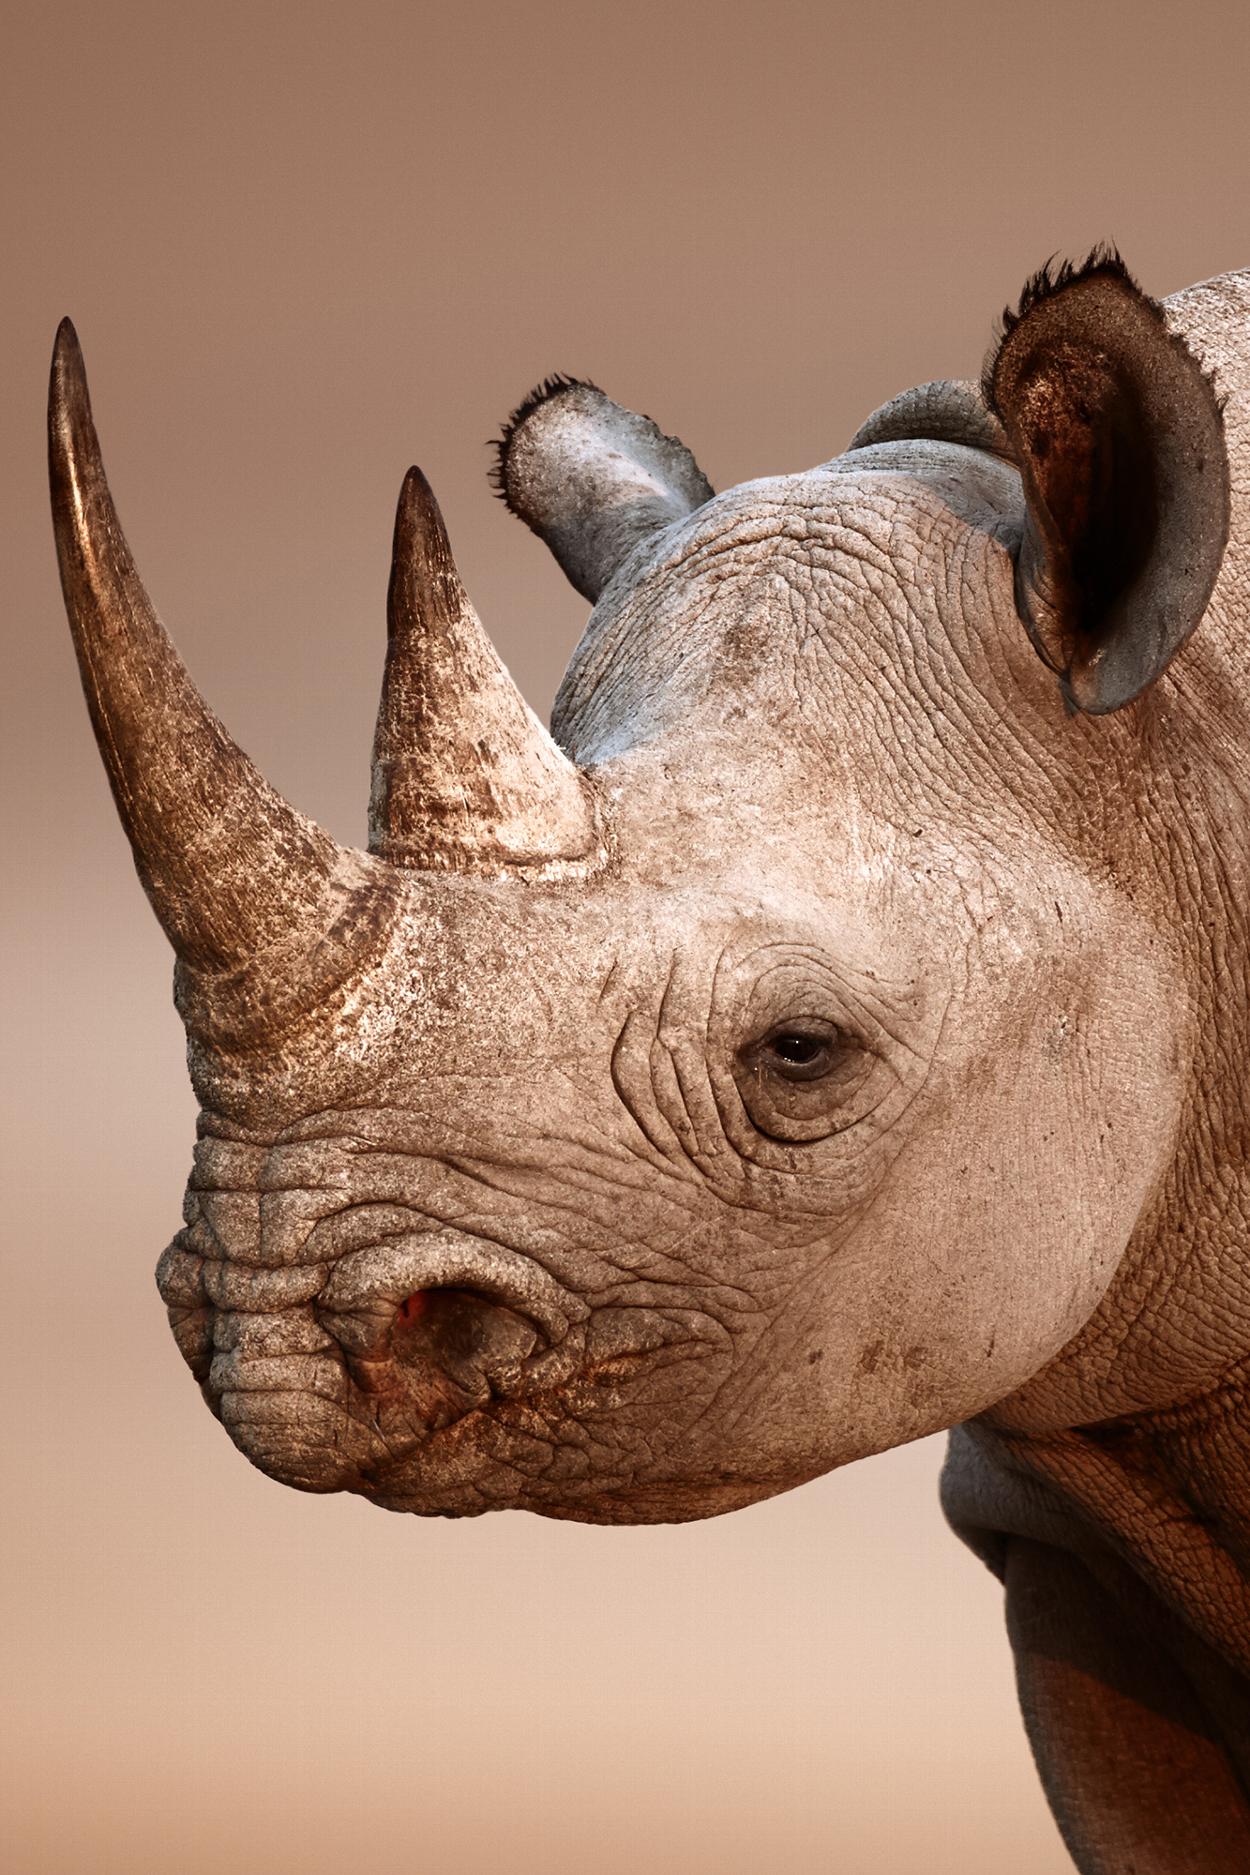 Black Rhinoceros in South Africa